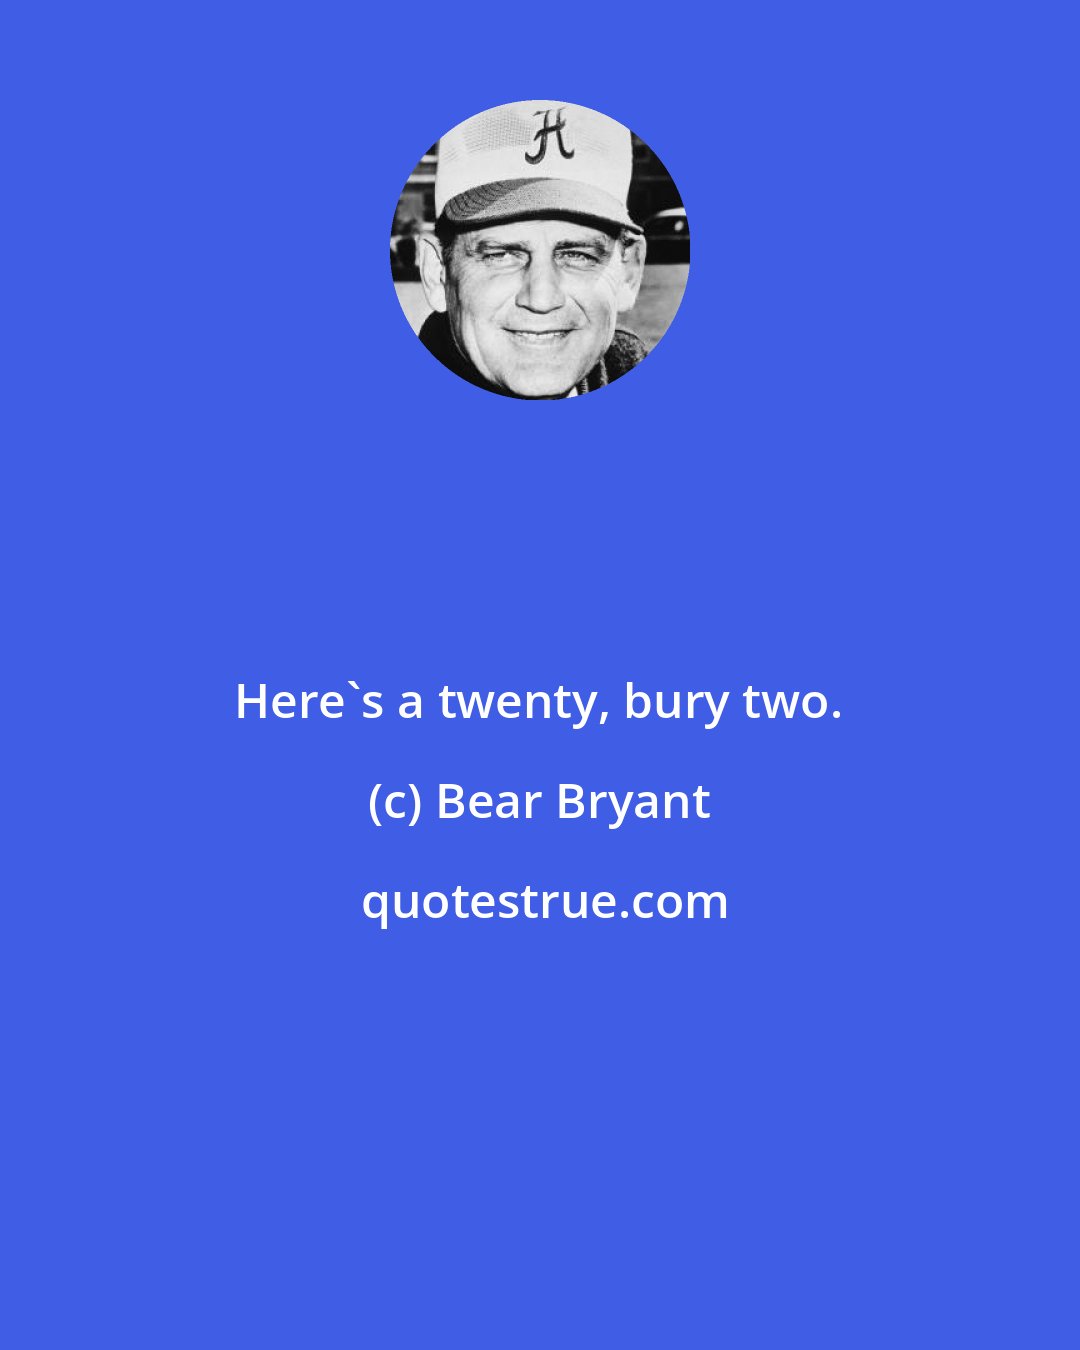 Bear Bryant: Here's a twenty, bury two.